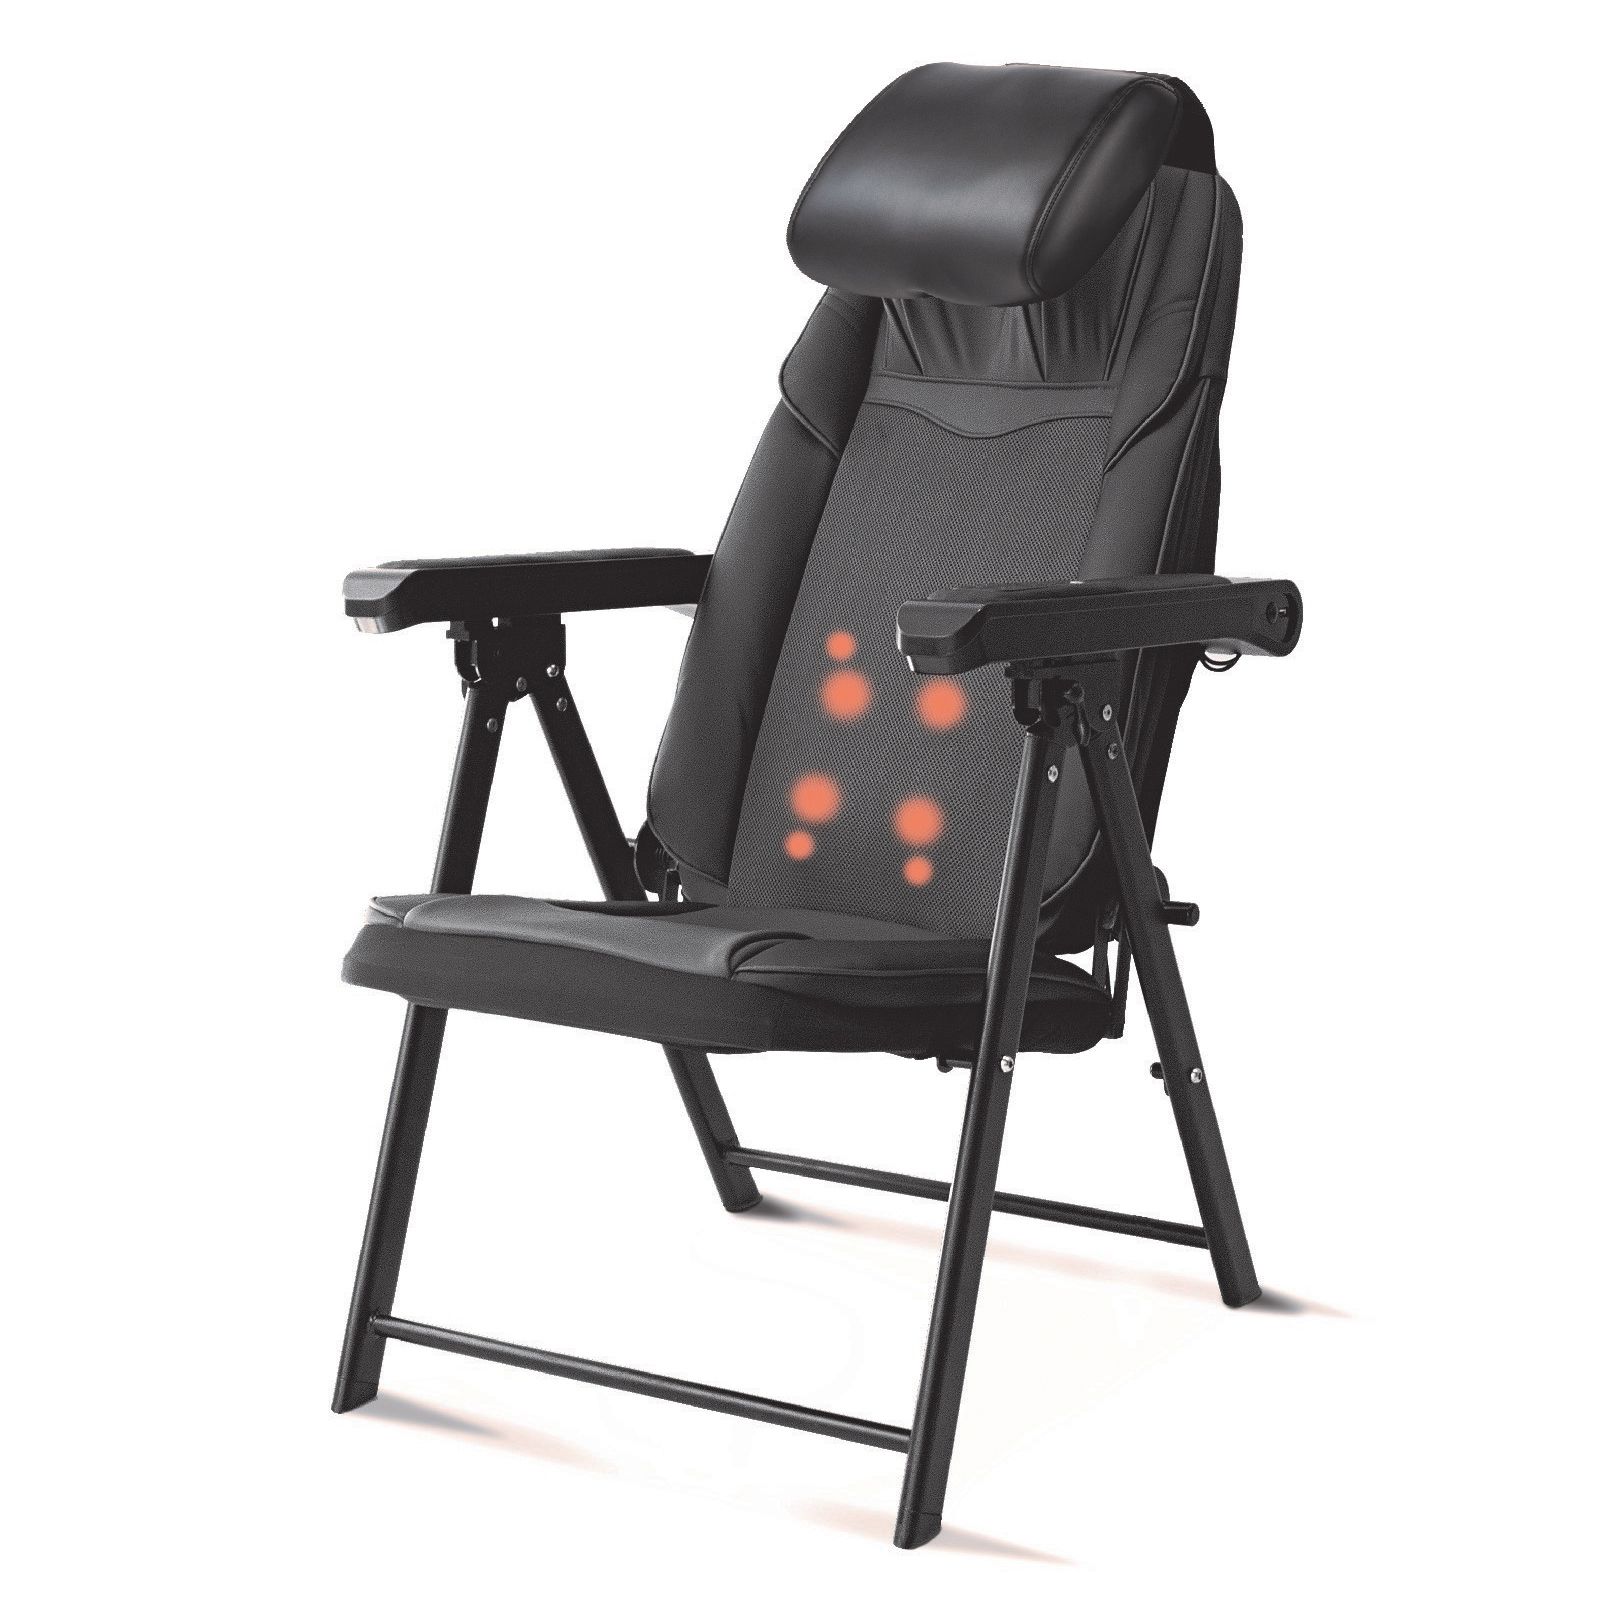 Sharper Image Foldable Shiatsu Massage Chair With Heat Bjs Wholesale Club Inventory Checker